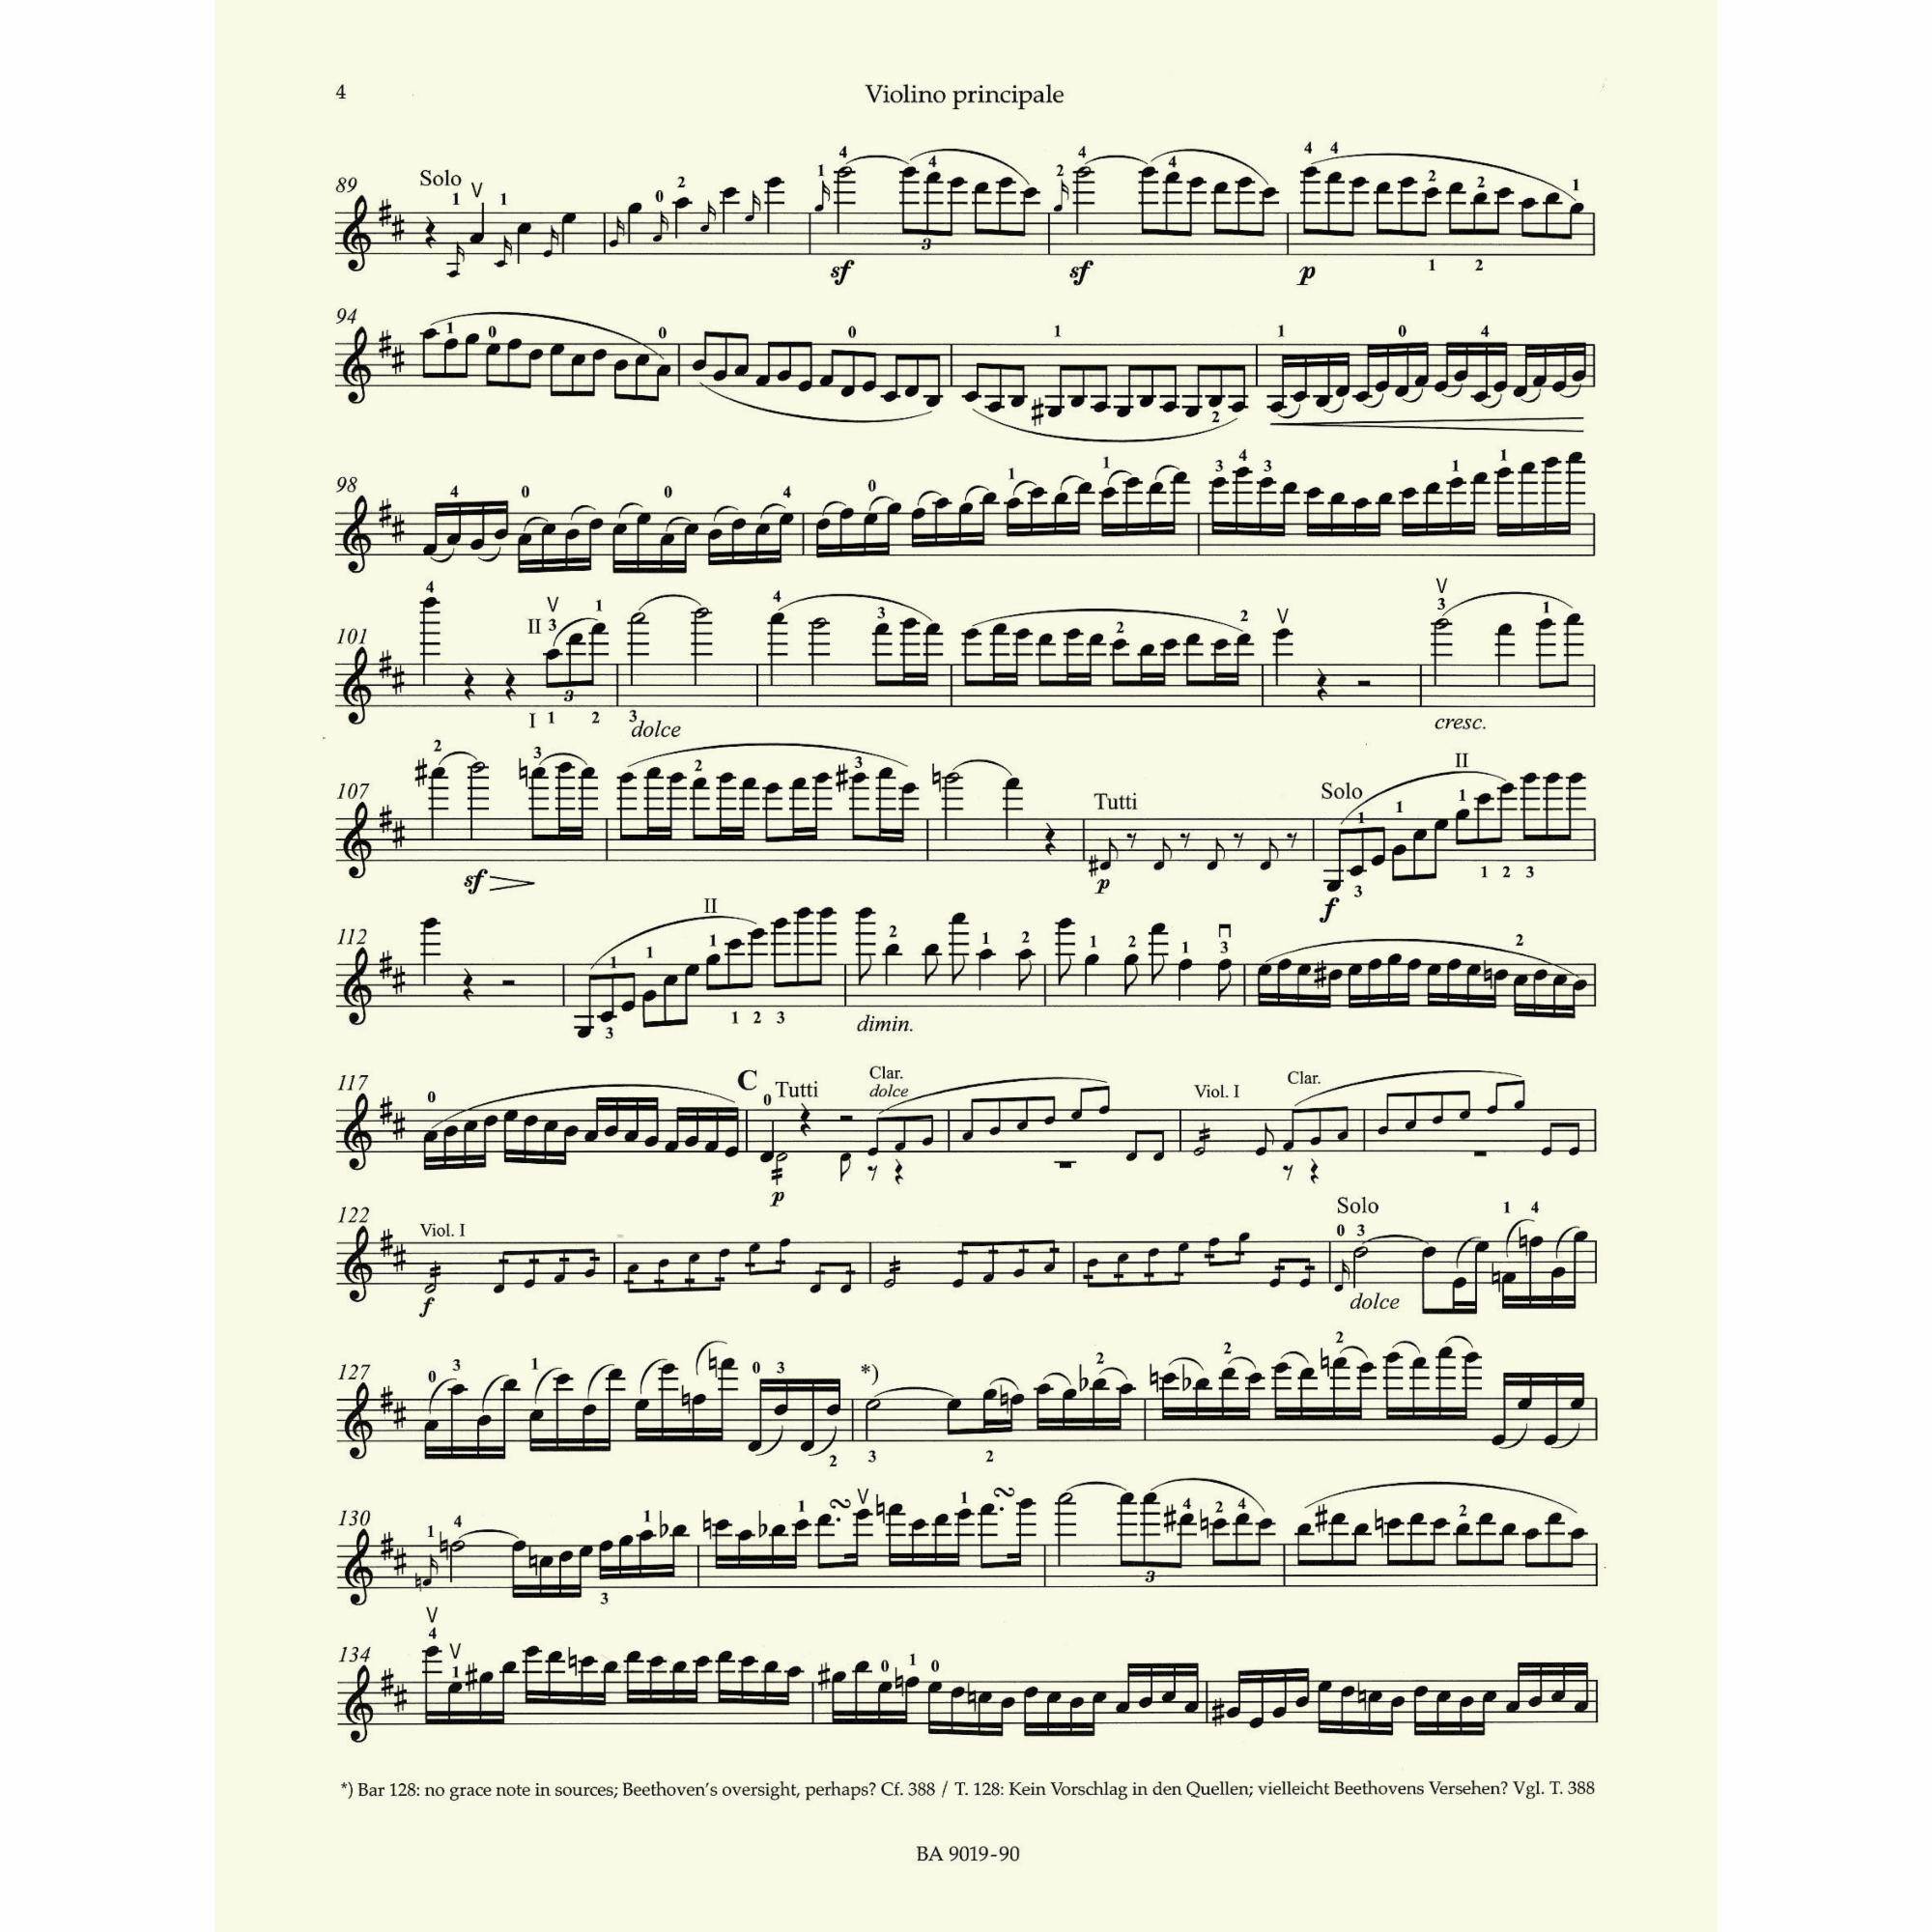 Sample: Marked Violin (Pg. 4)